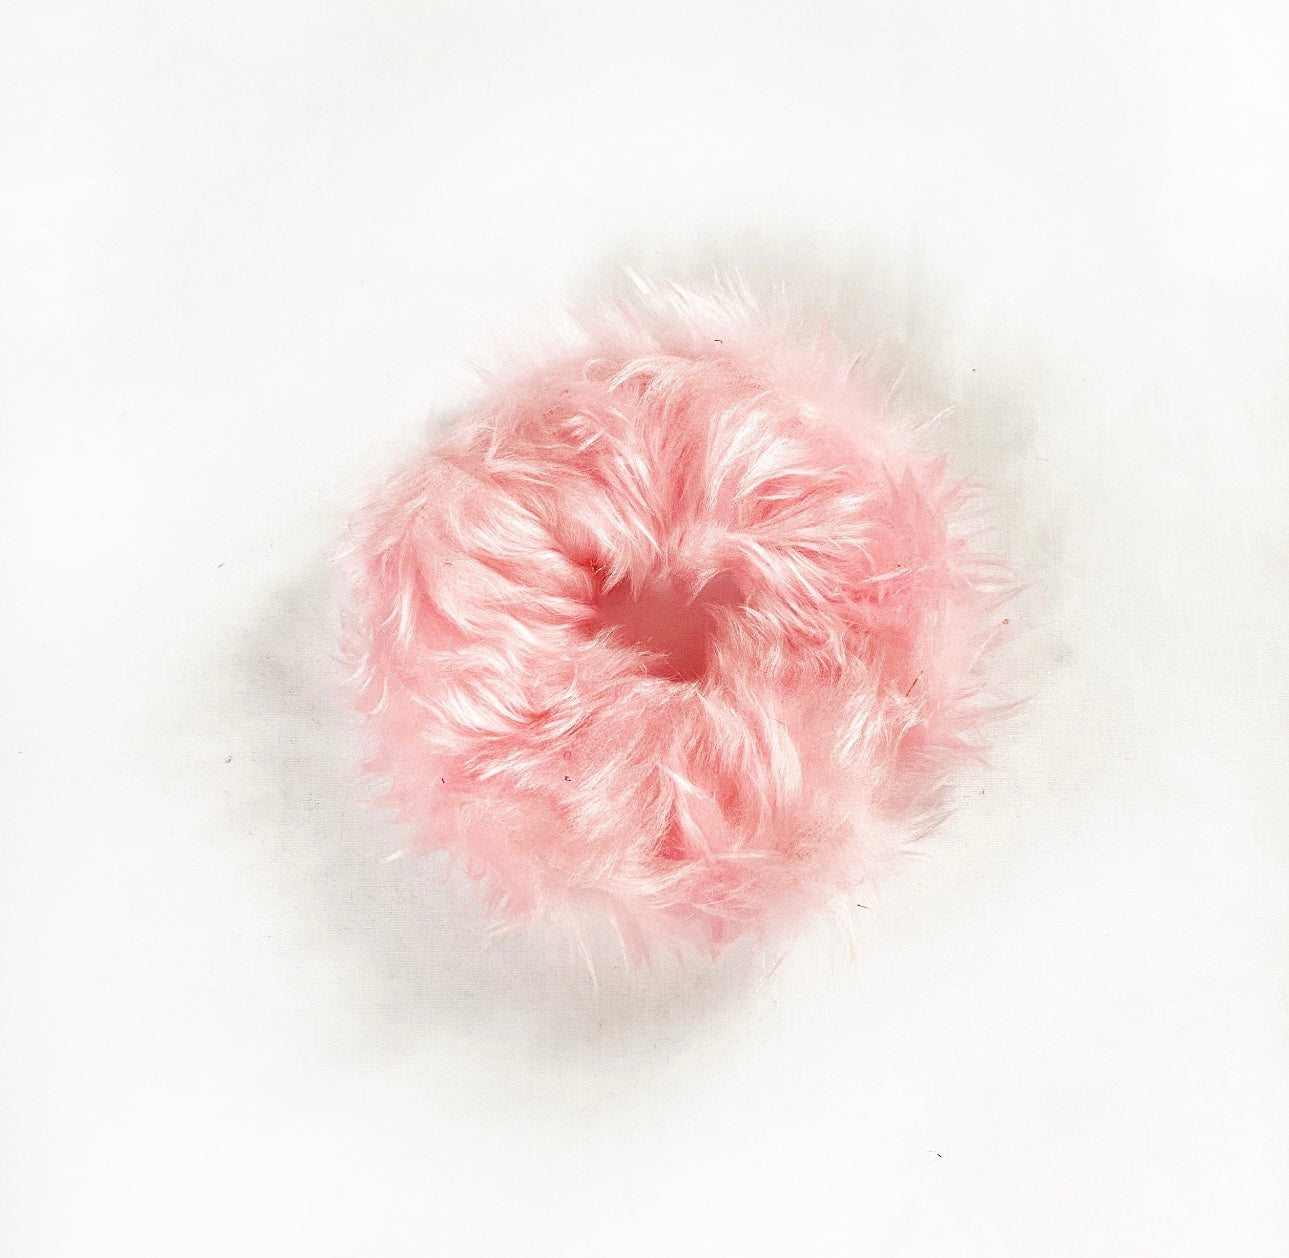 Mini Scrunchie in Snowy/Candyfloss